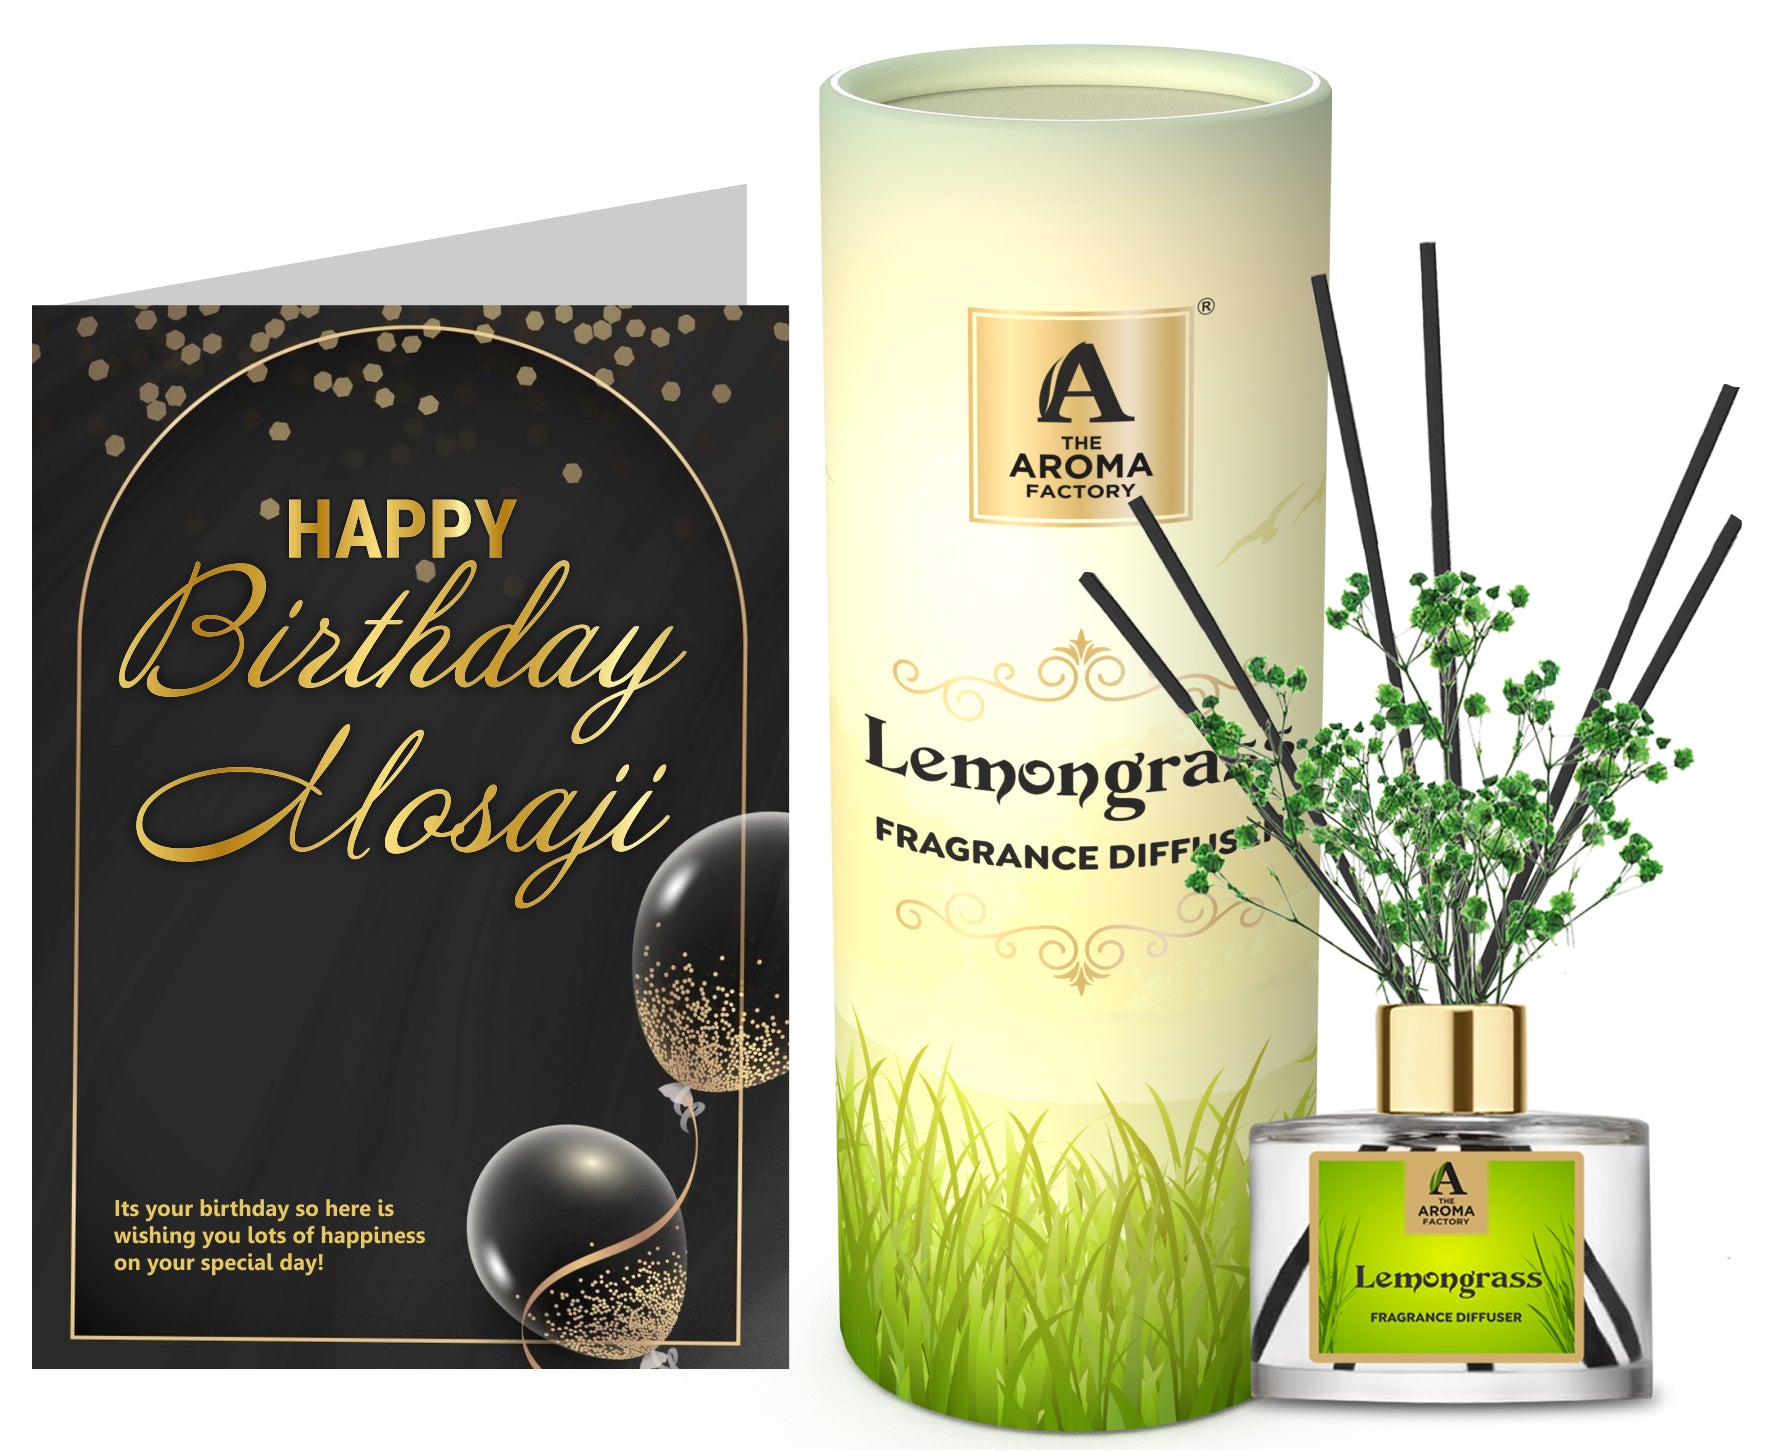 The Aroma Factory Happy Birthday Mosaji/Masaji Gift with Card, Lemongrass Fragrance Reed Diffuser Set (1 Box + 1 Card)